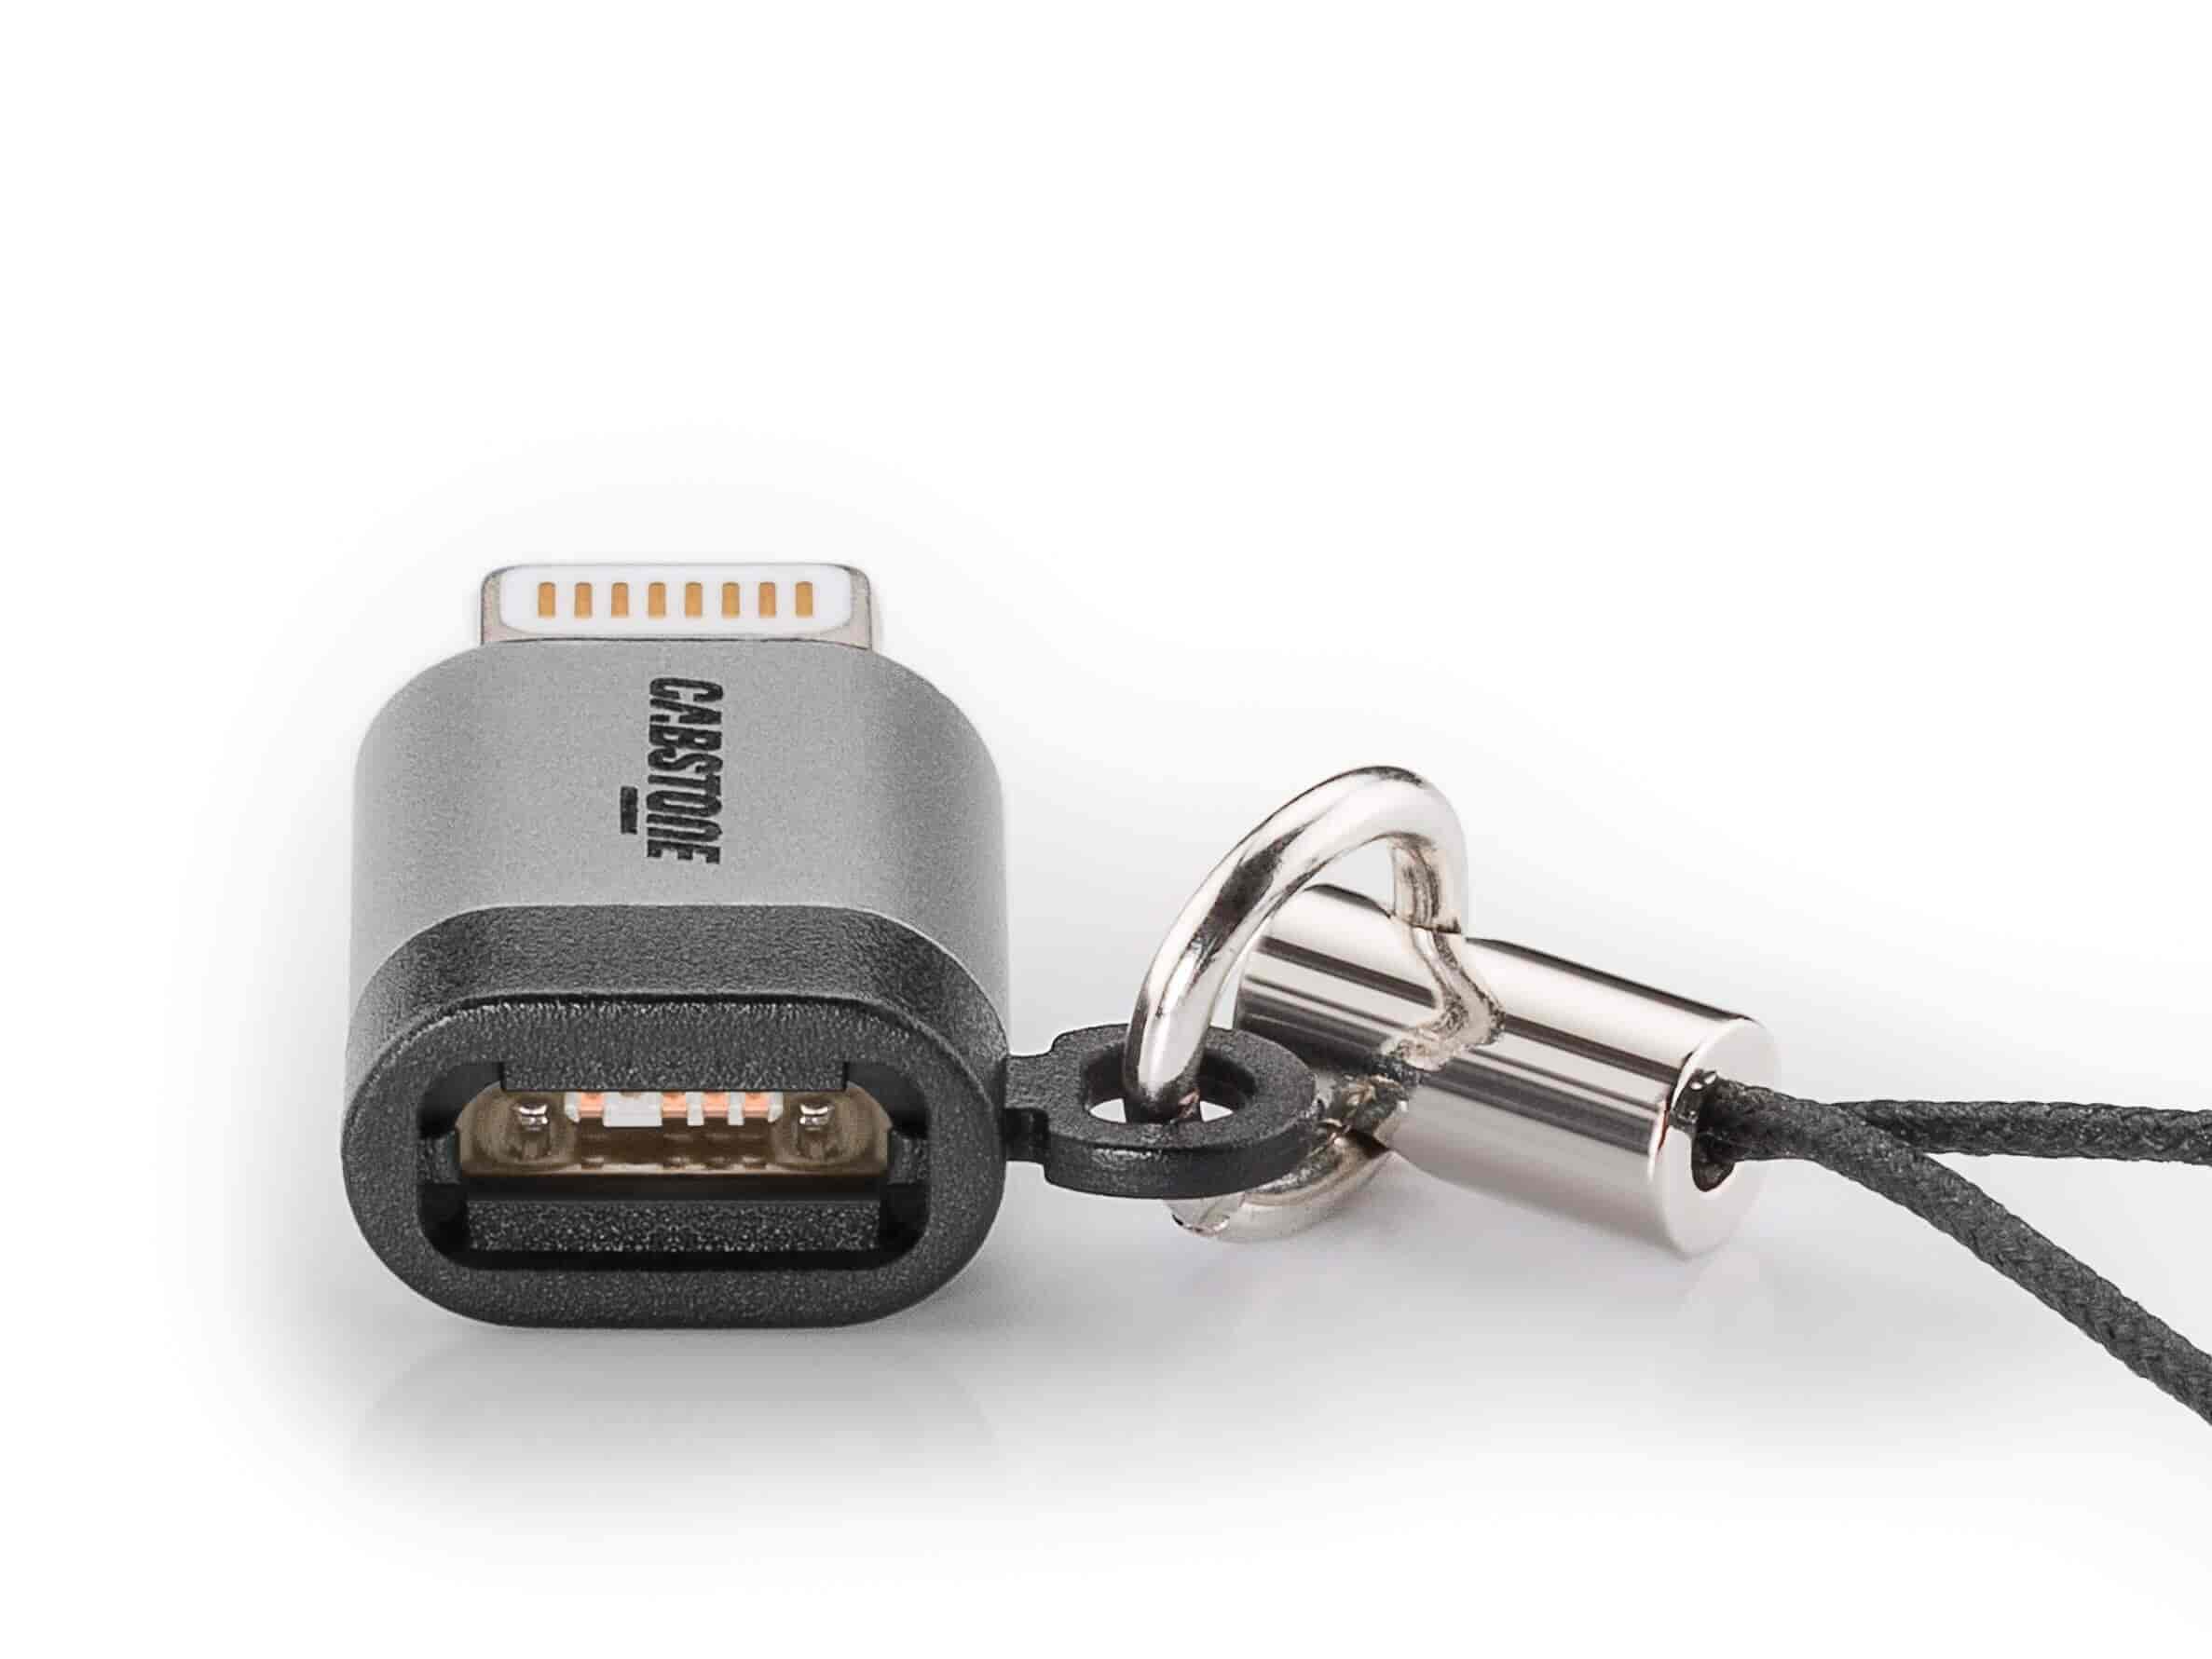 Apple Lightning to Micro USB adaptor